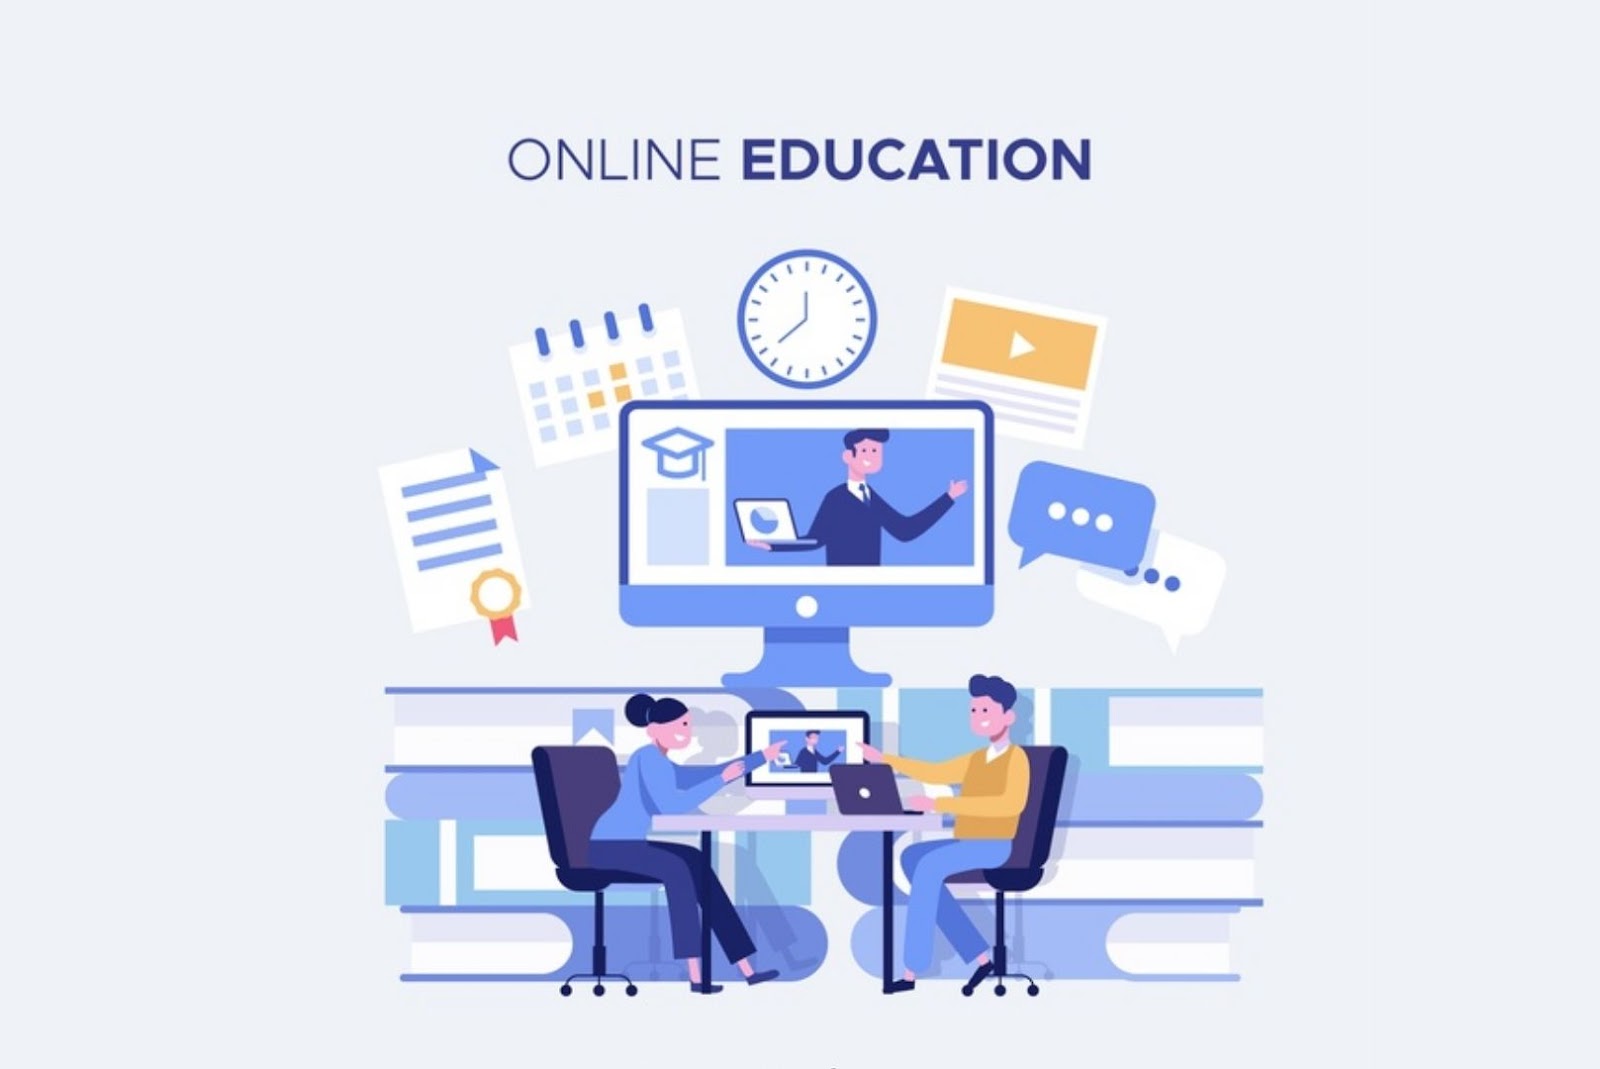 Online Education business ideas